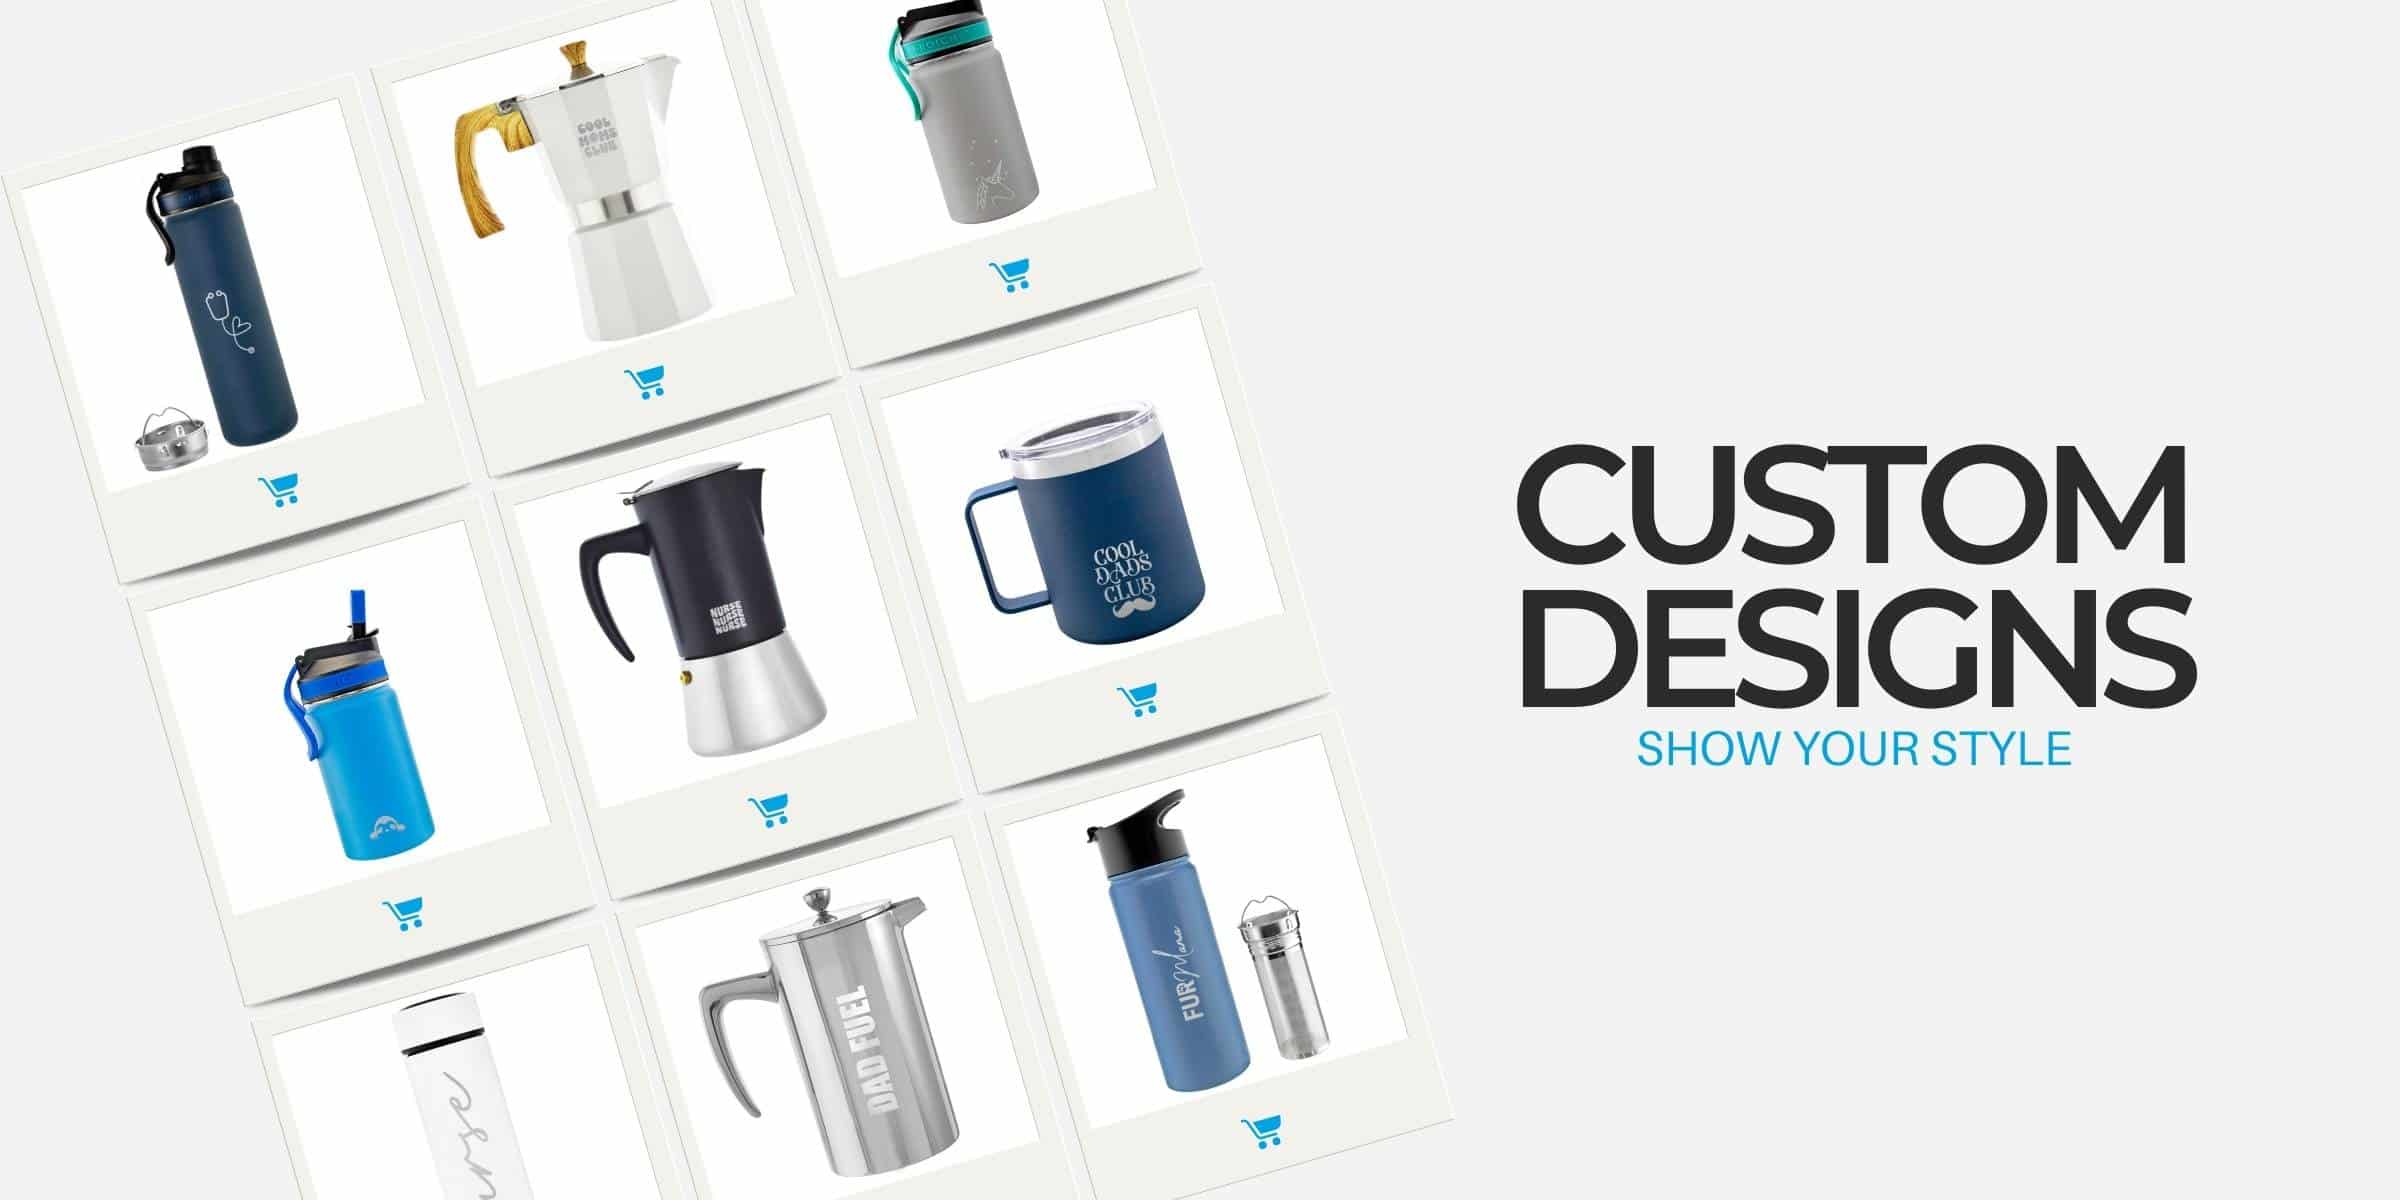 grosche custom designs Show your style through custom design coffee makers and drinkware custom logo water bottles custom logo gifts